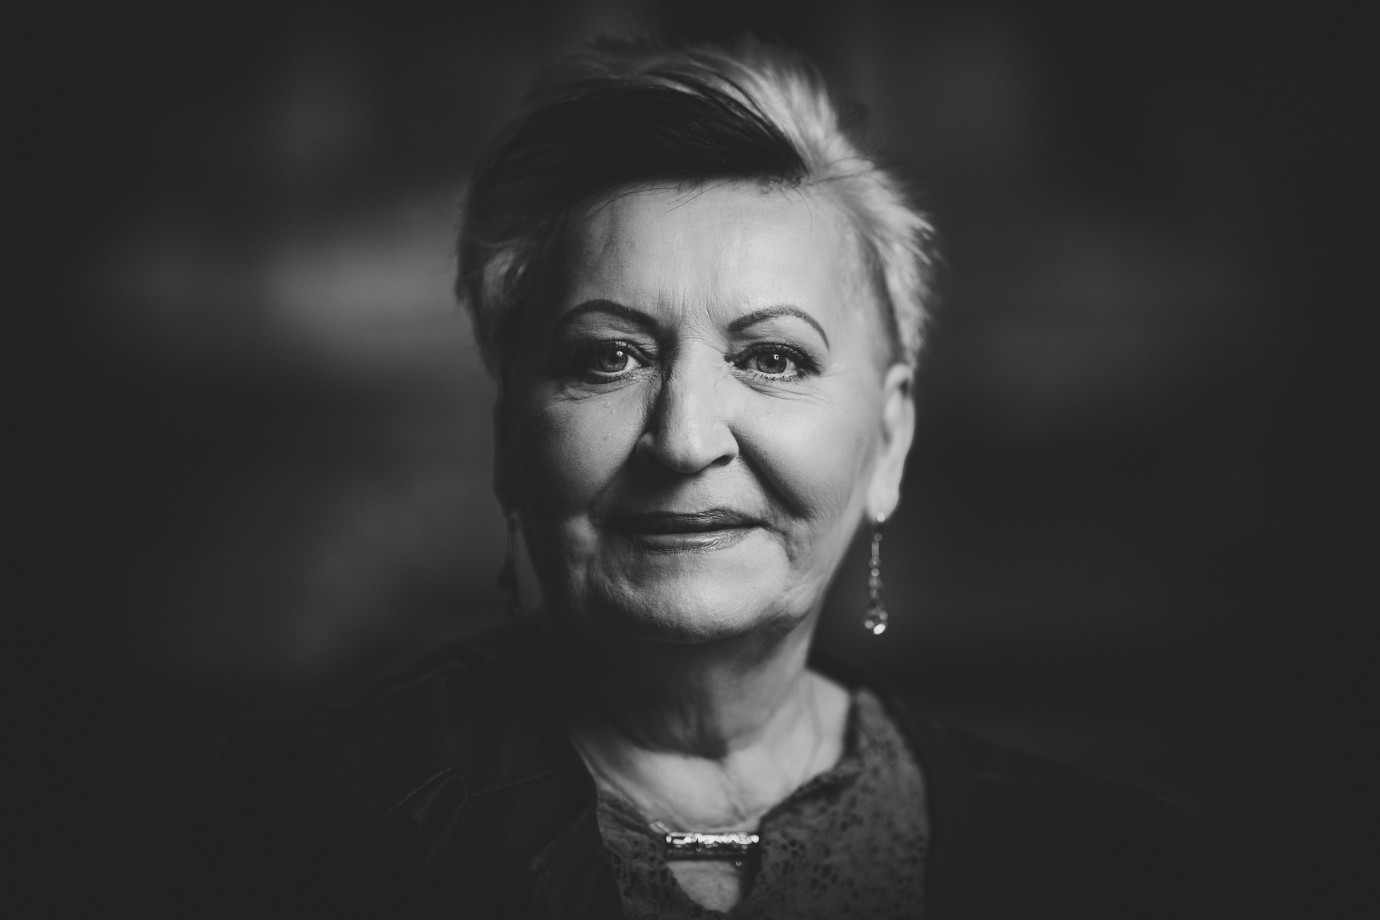 fotograf bielsko-biala ogniskova portfolio portret zdjecia portrety